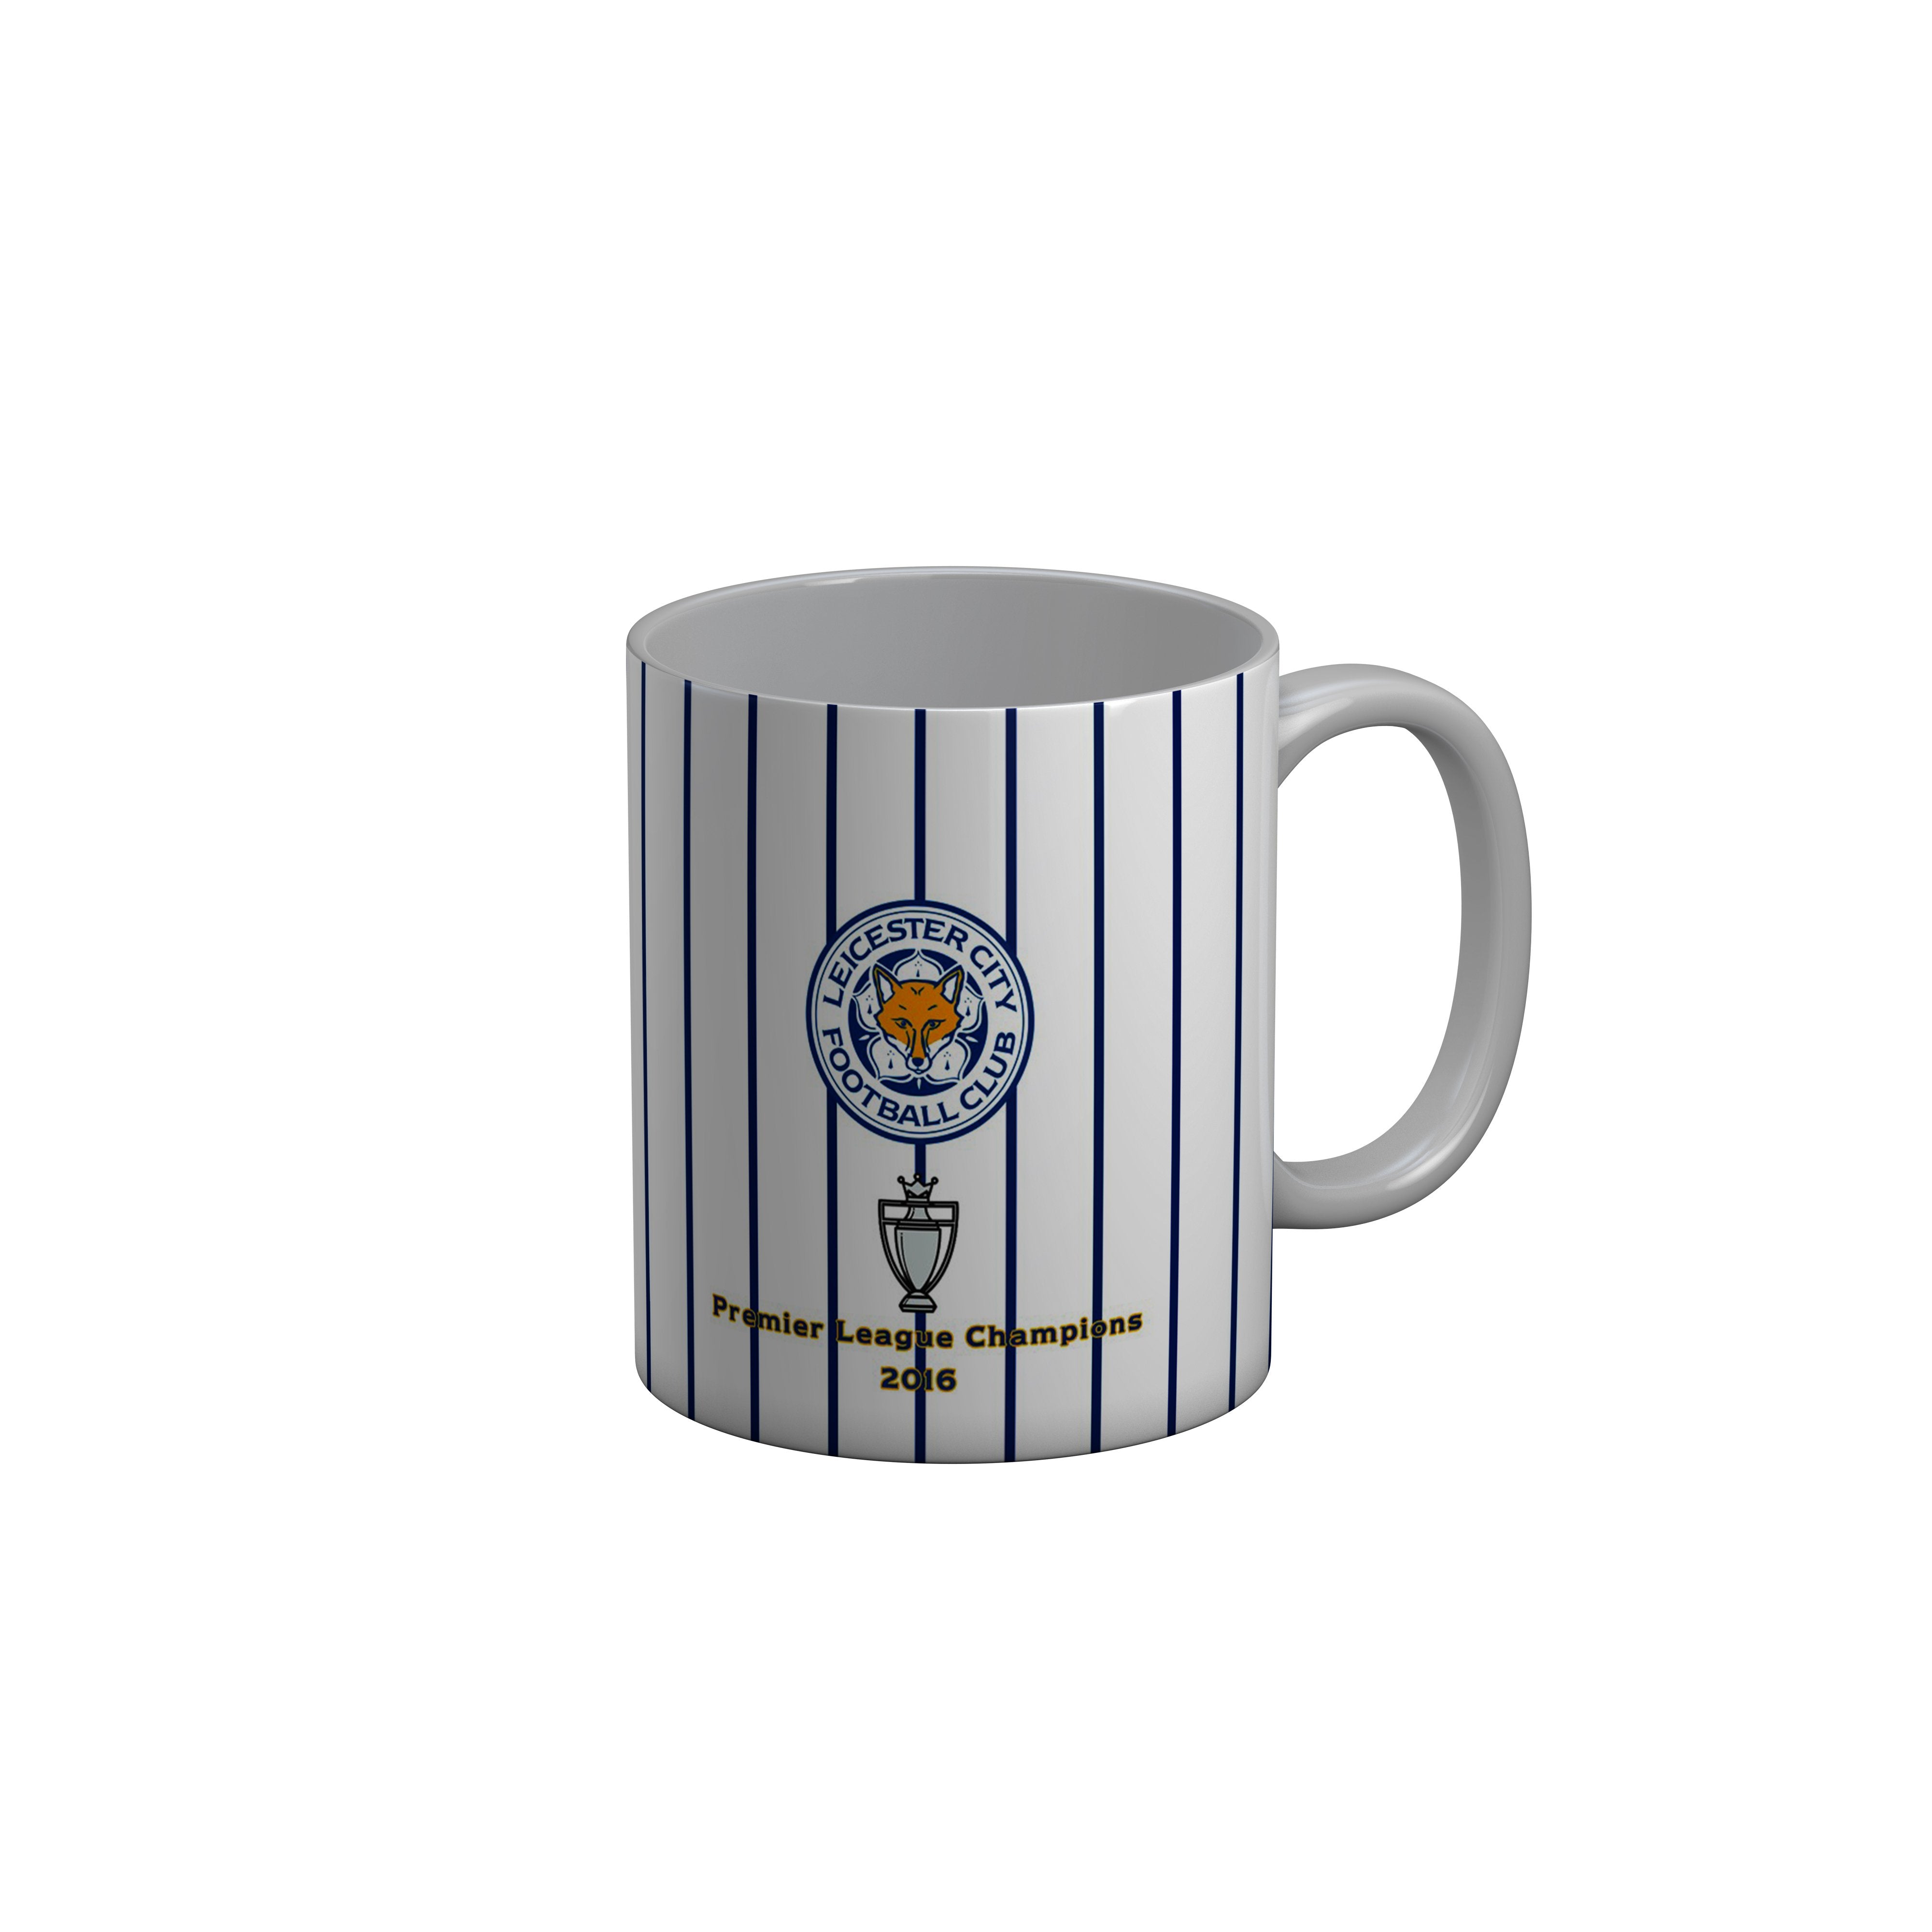 FashionRazor Leicester City Football Club Premier League Champions 2016 Ceramic Coffee Mug